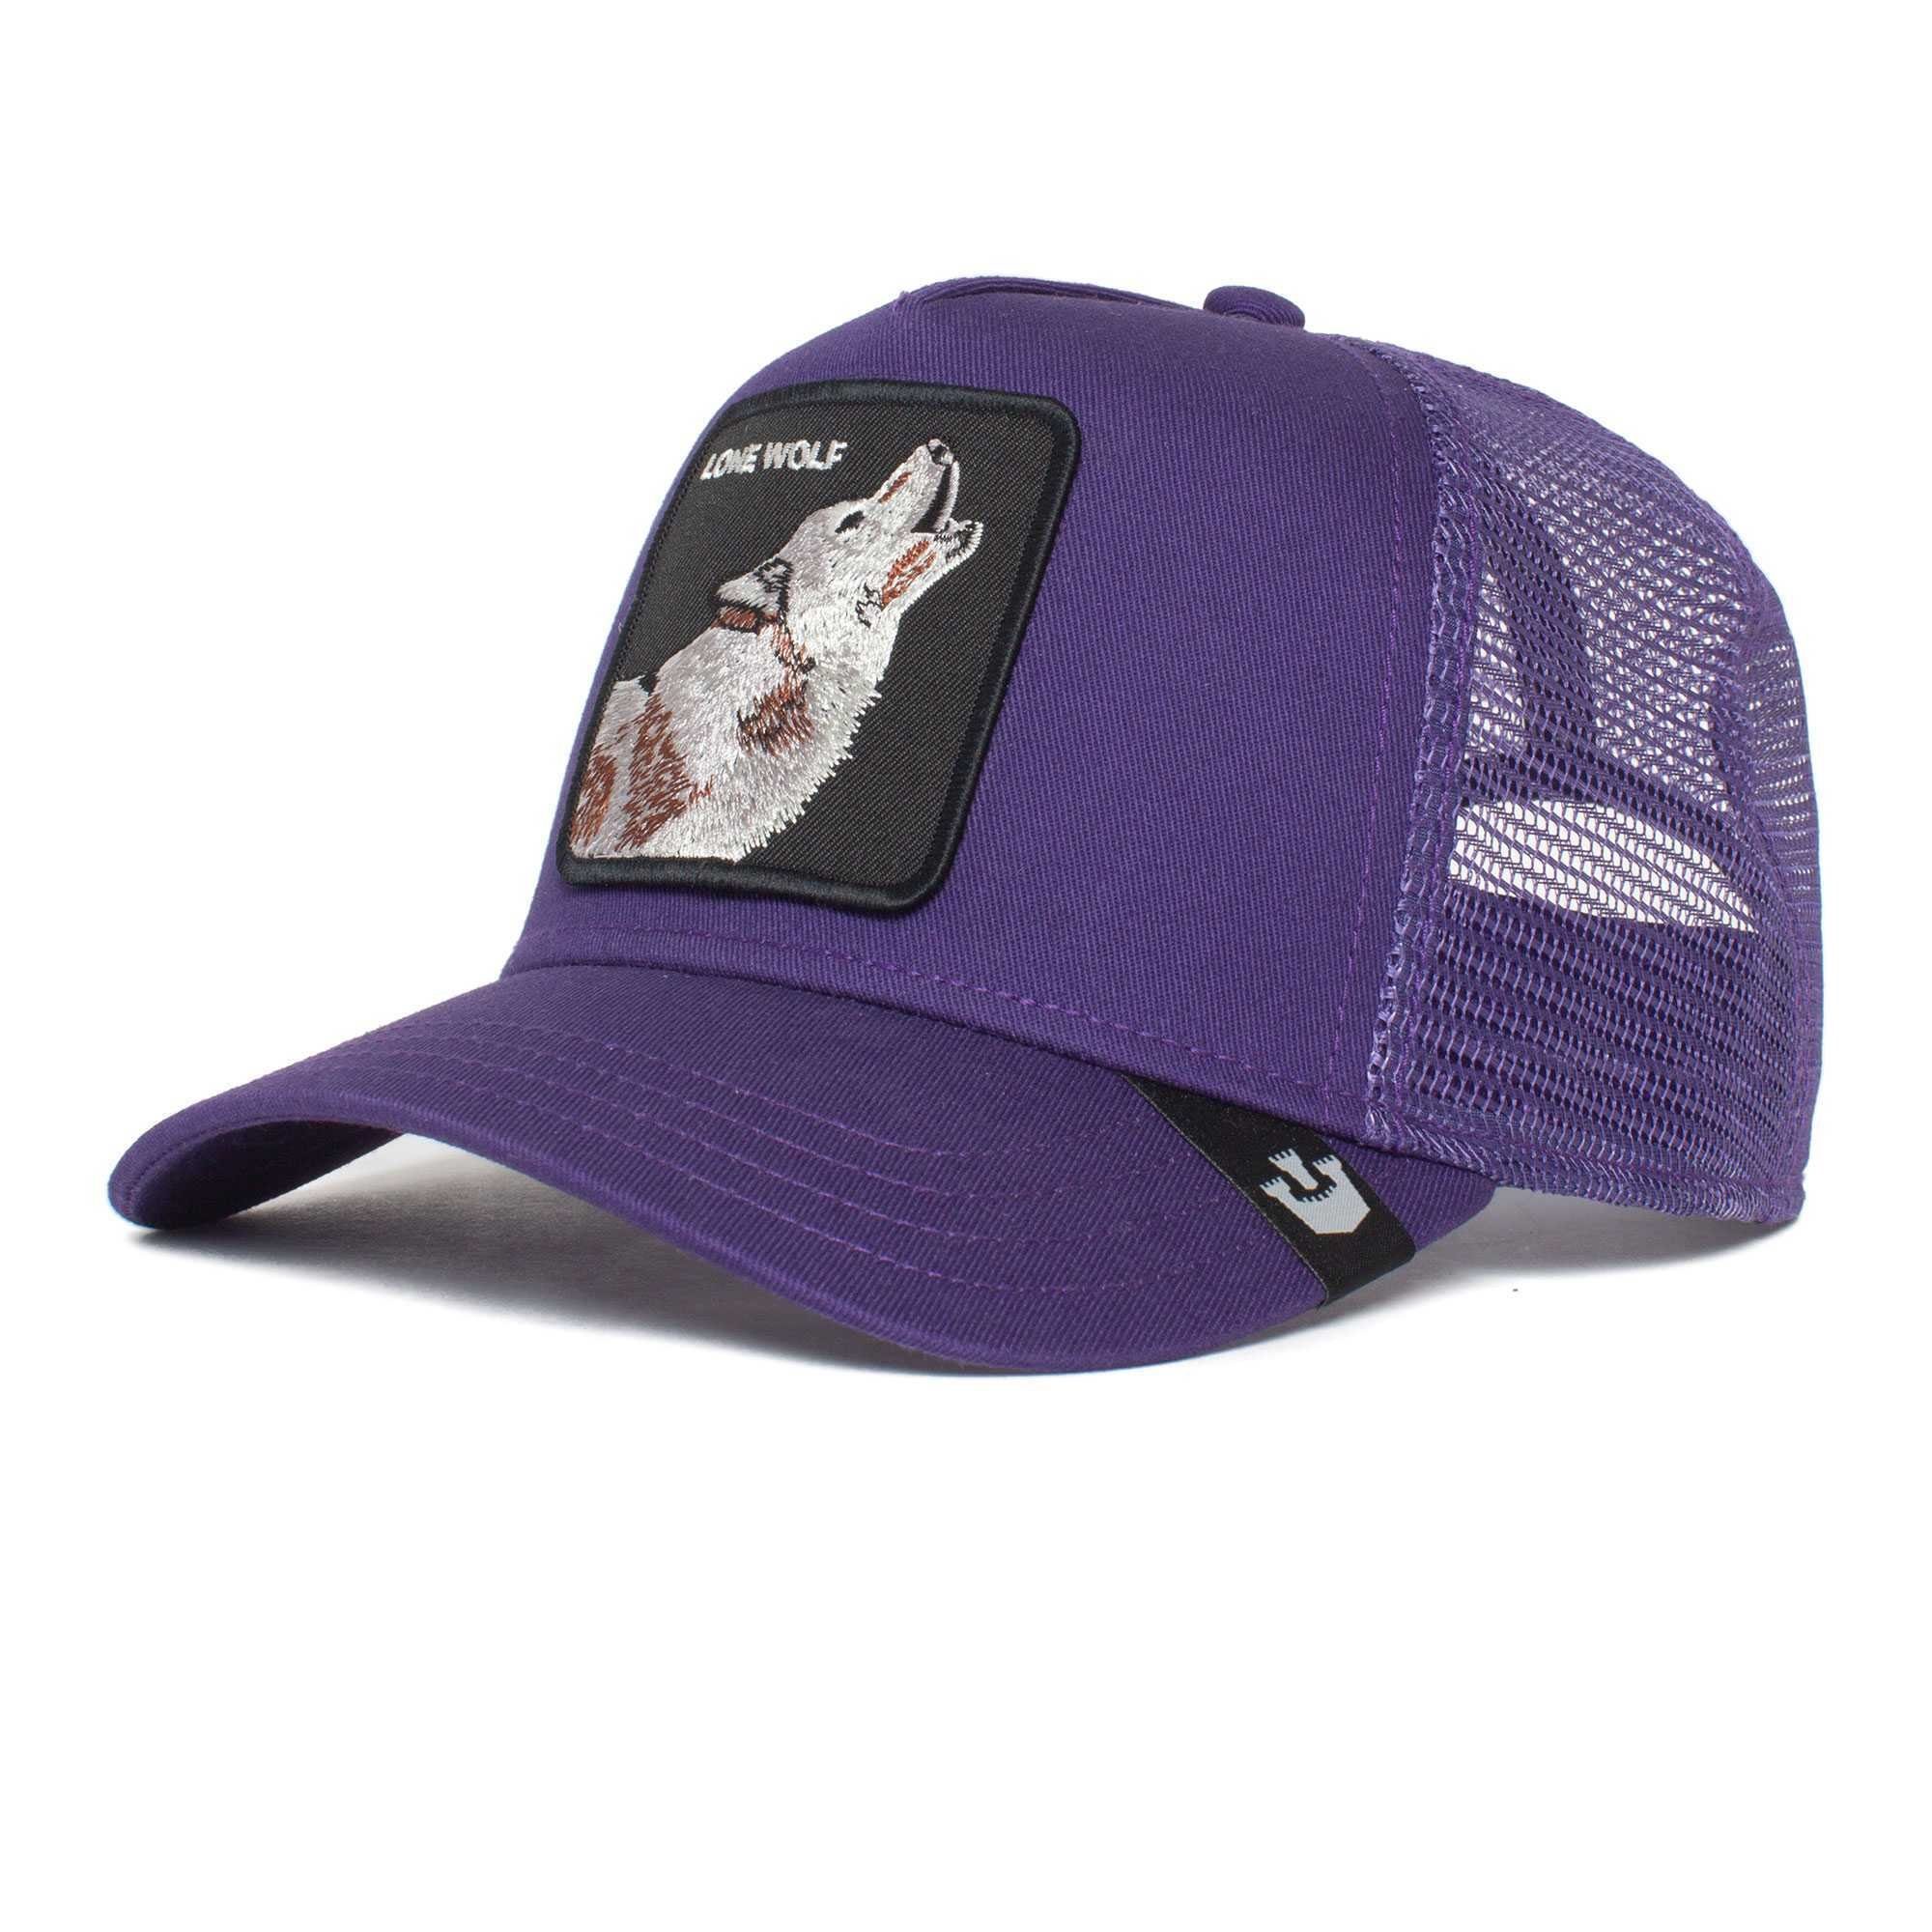 GOORIN Bros. Baseball Cap Unisex Trucker Cap - Kappe, Frontpatch, One Size The Lone Wolf purple